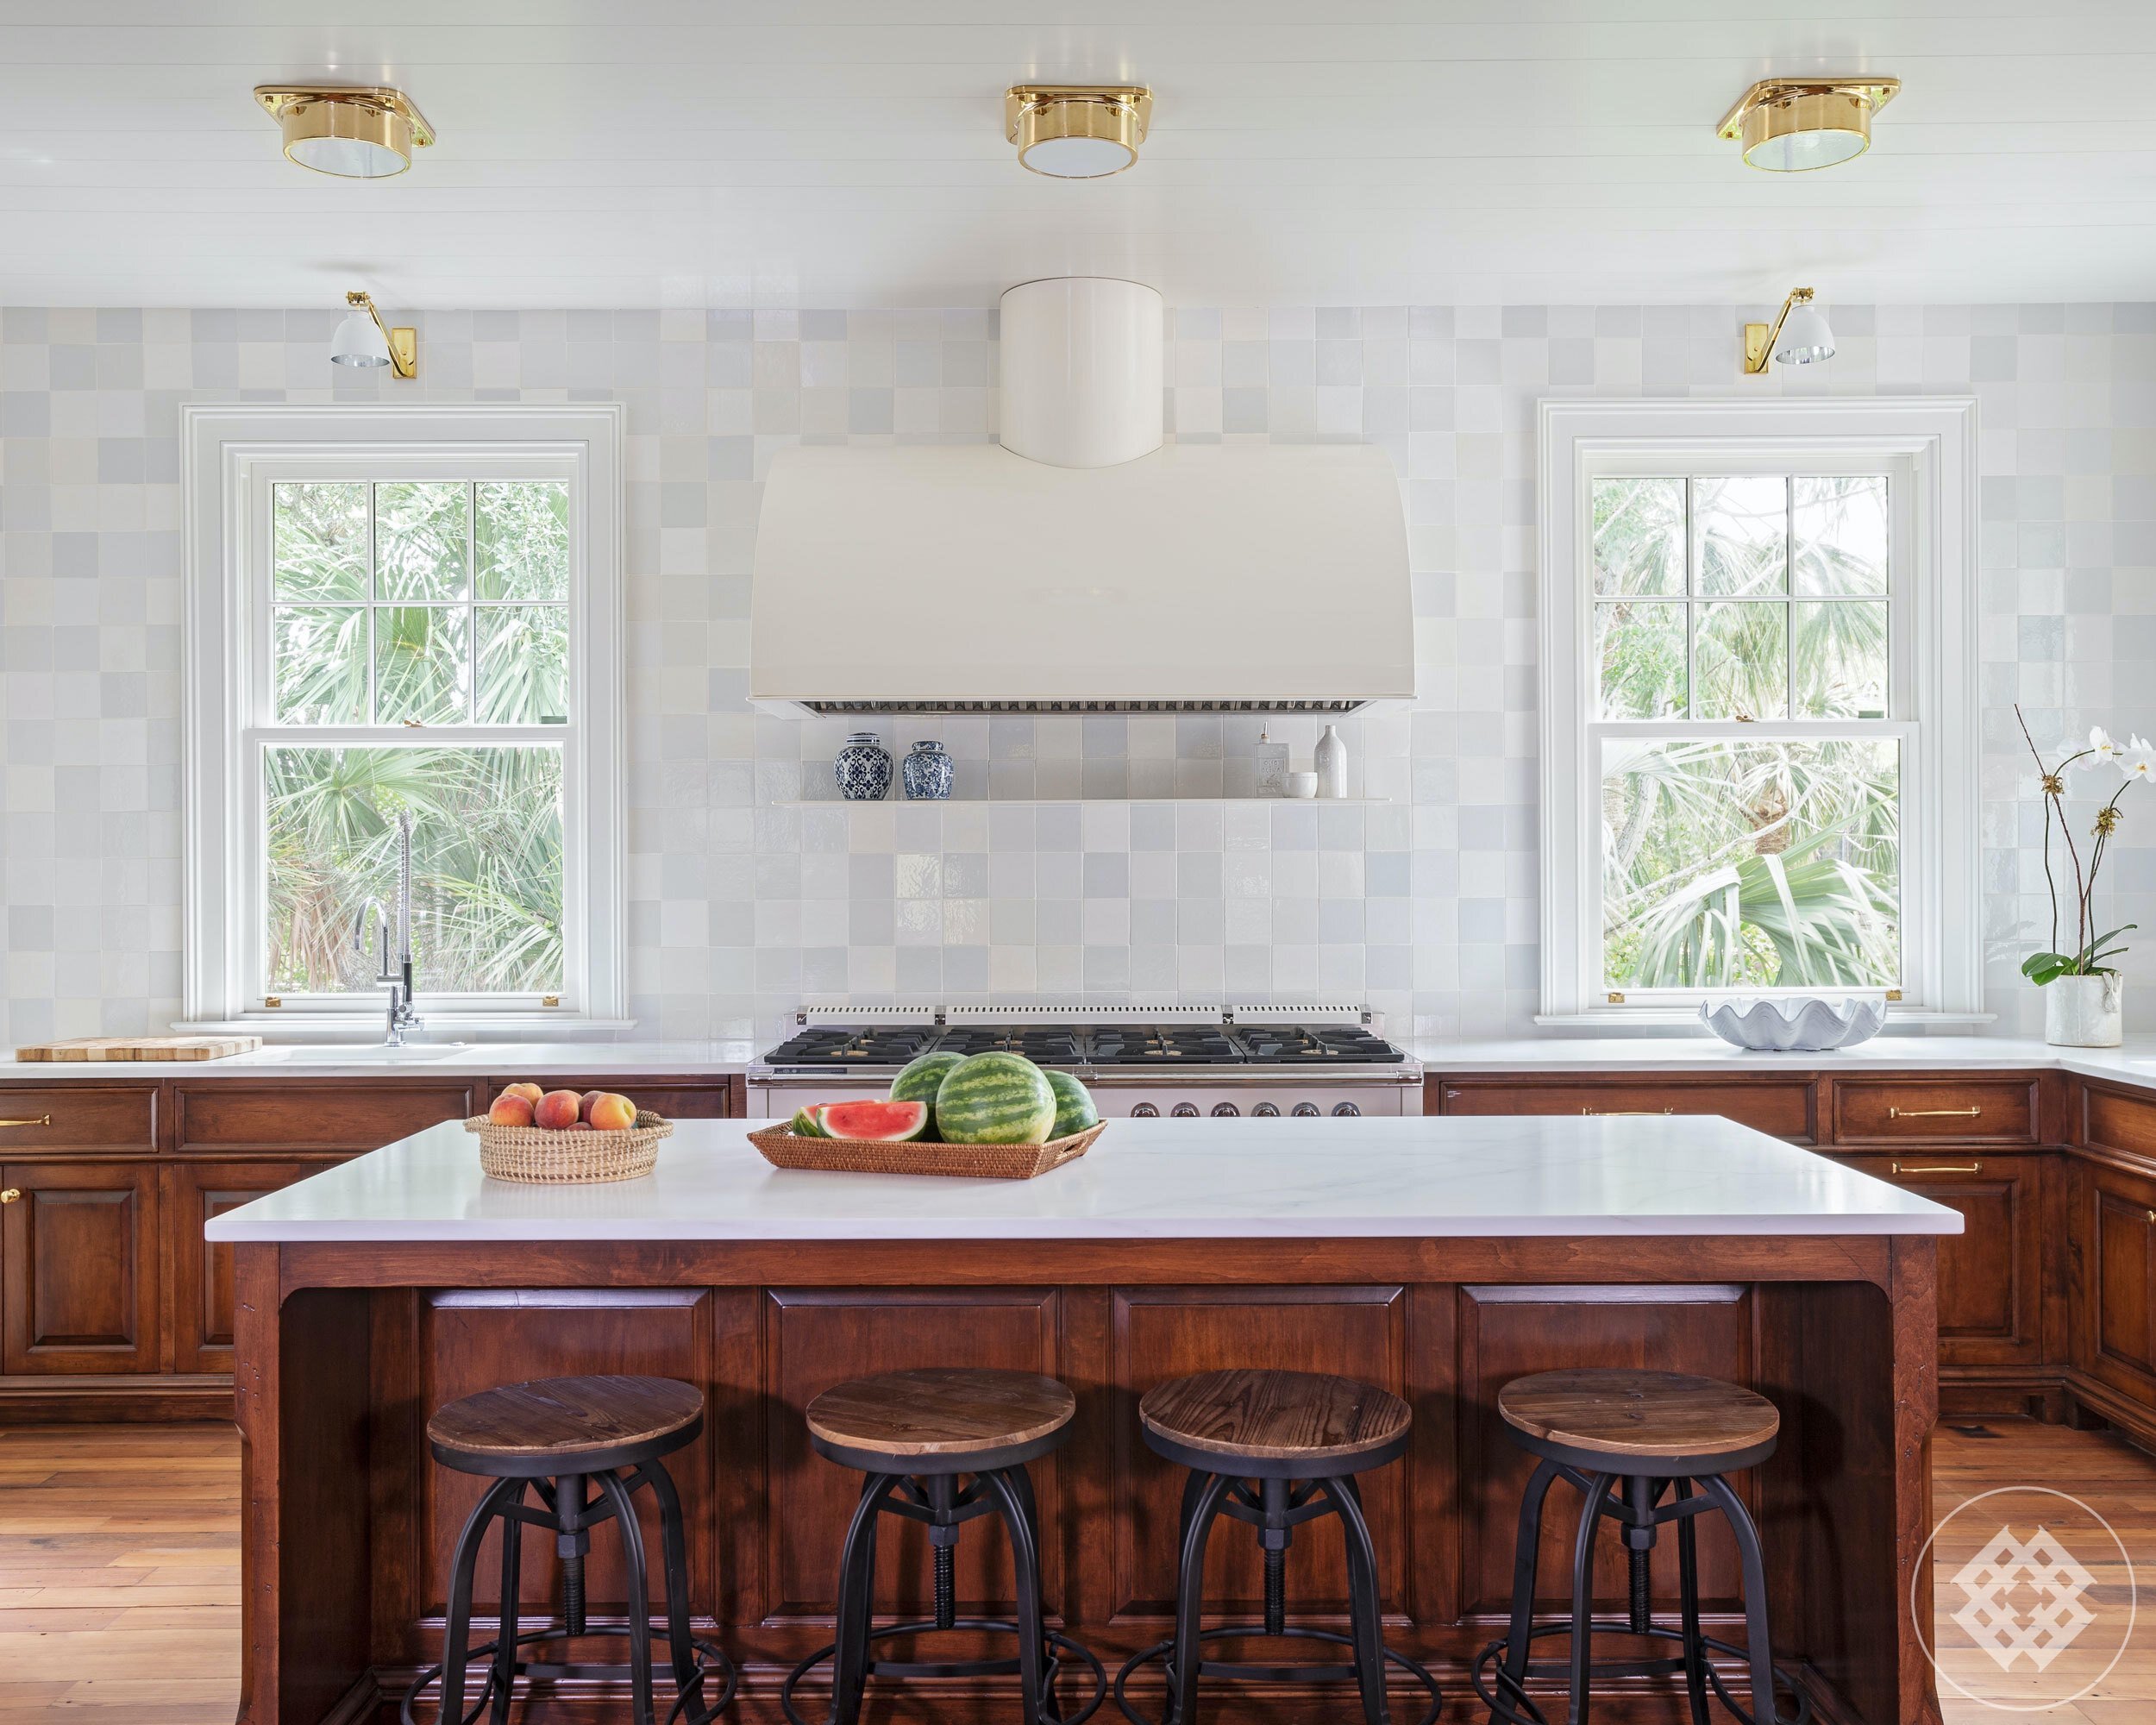 bcb-kitchen-white-namib-marble-countertops-delft-mosiac-tile-backsplash-vintage-barstools.jpg